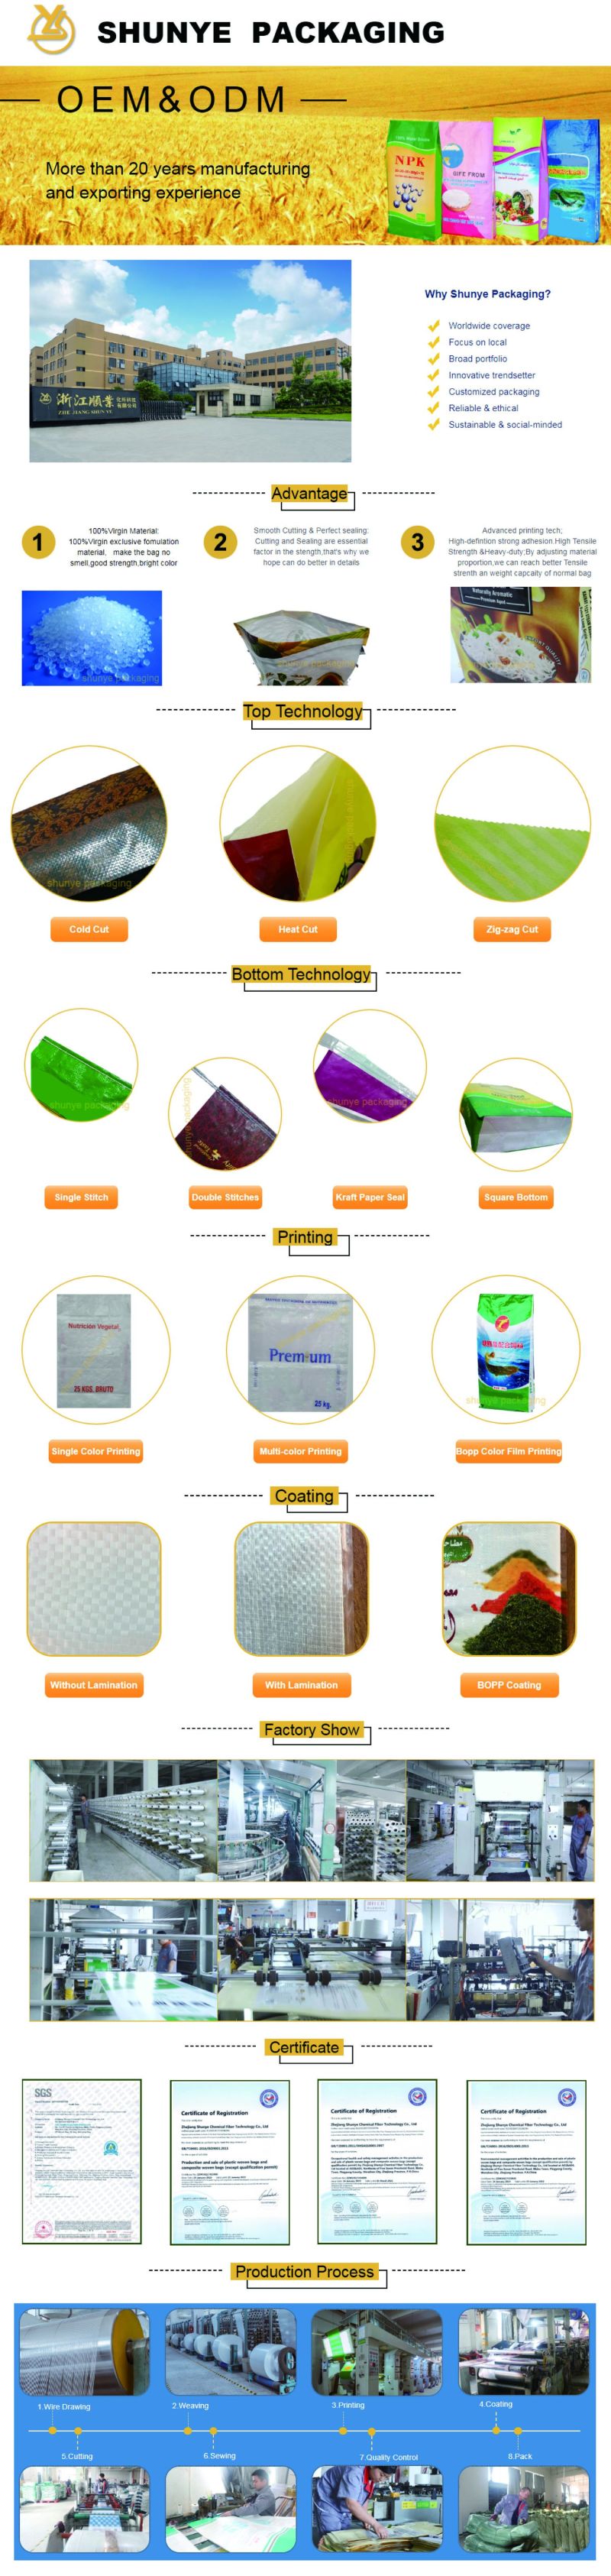 15kg Plastic Packaging Rice Bag/Sack with BOPP Film Lamination